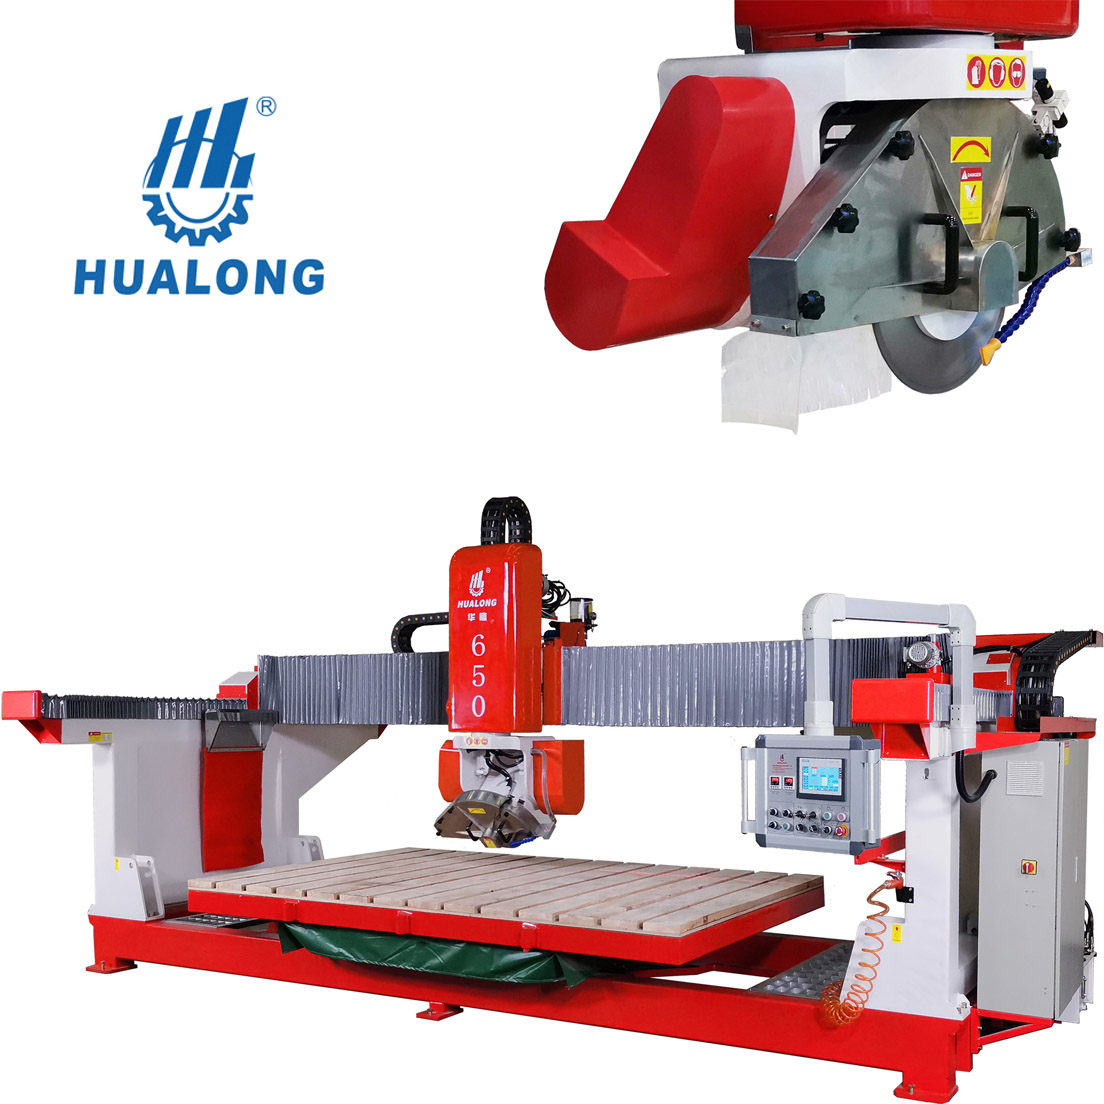 Hualong HLSQ-650 Automatic CNC Stone Marble Granite Quartz Tile Cutting Machine with Siemens PLC control system